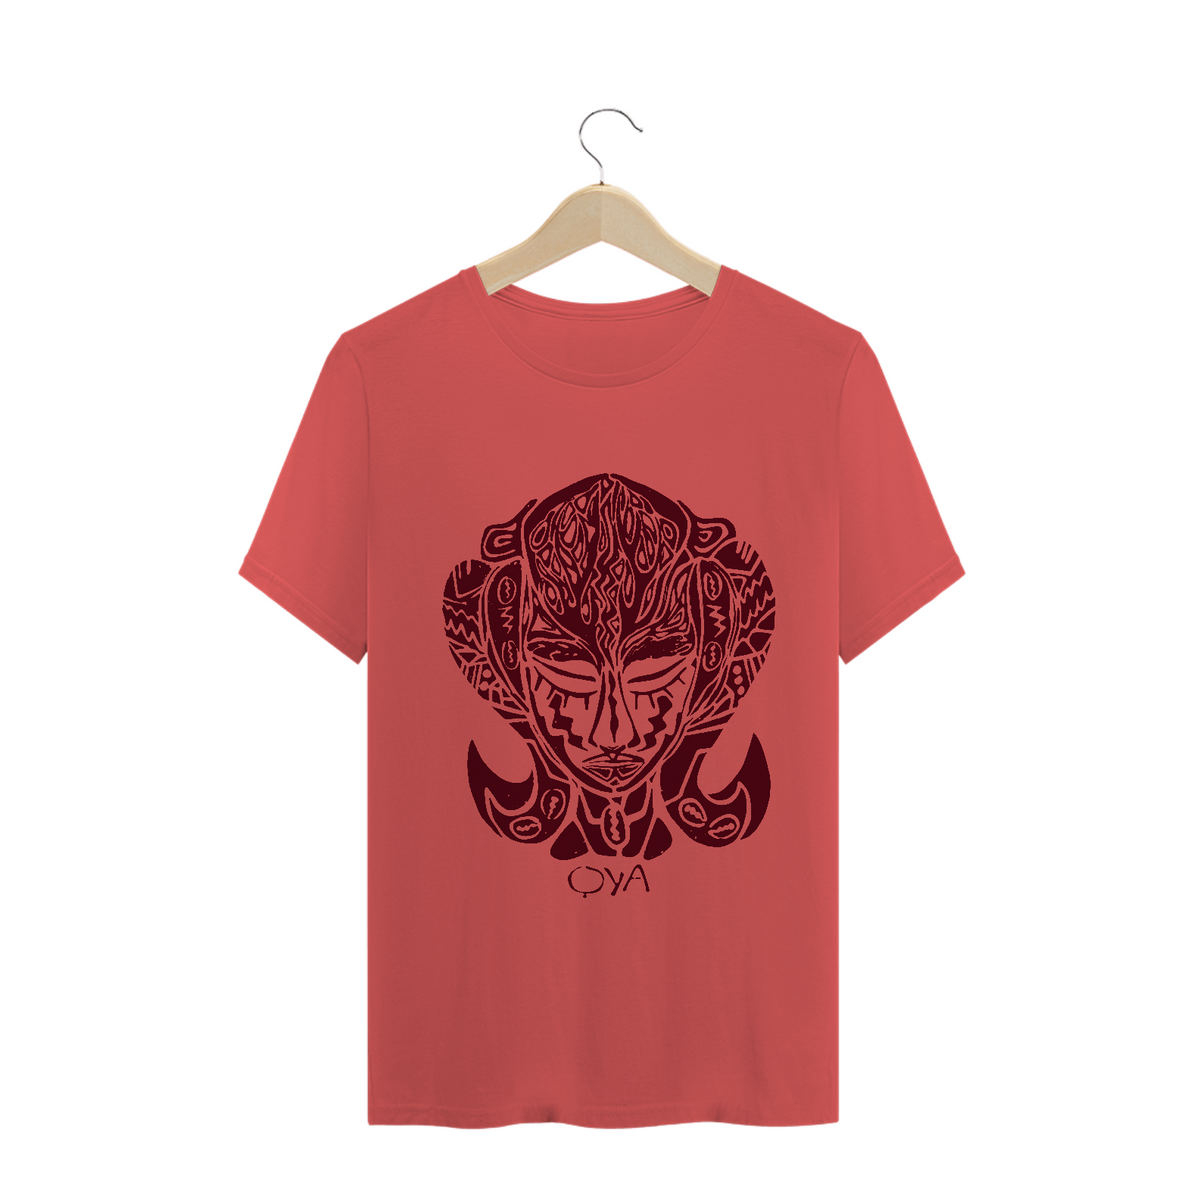 Nome do produto: Camiseta Malha Estonada Vermelha - Estampa Oya